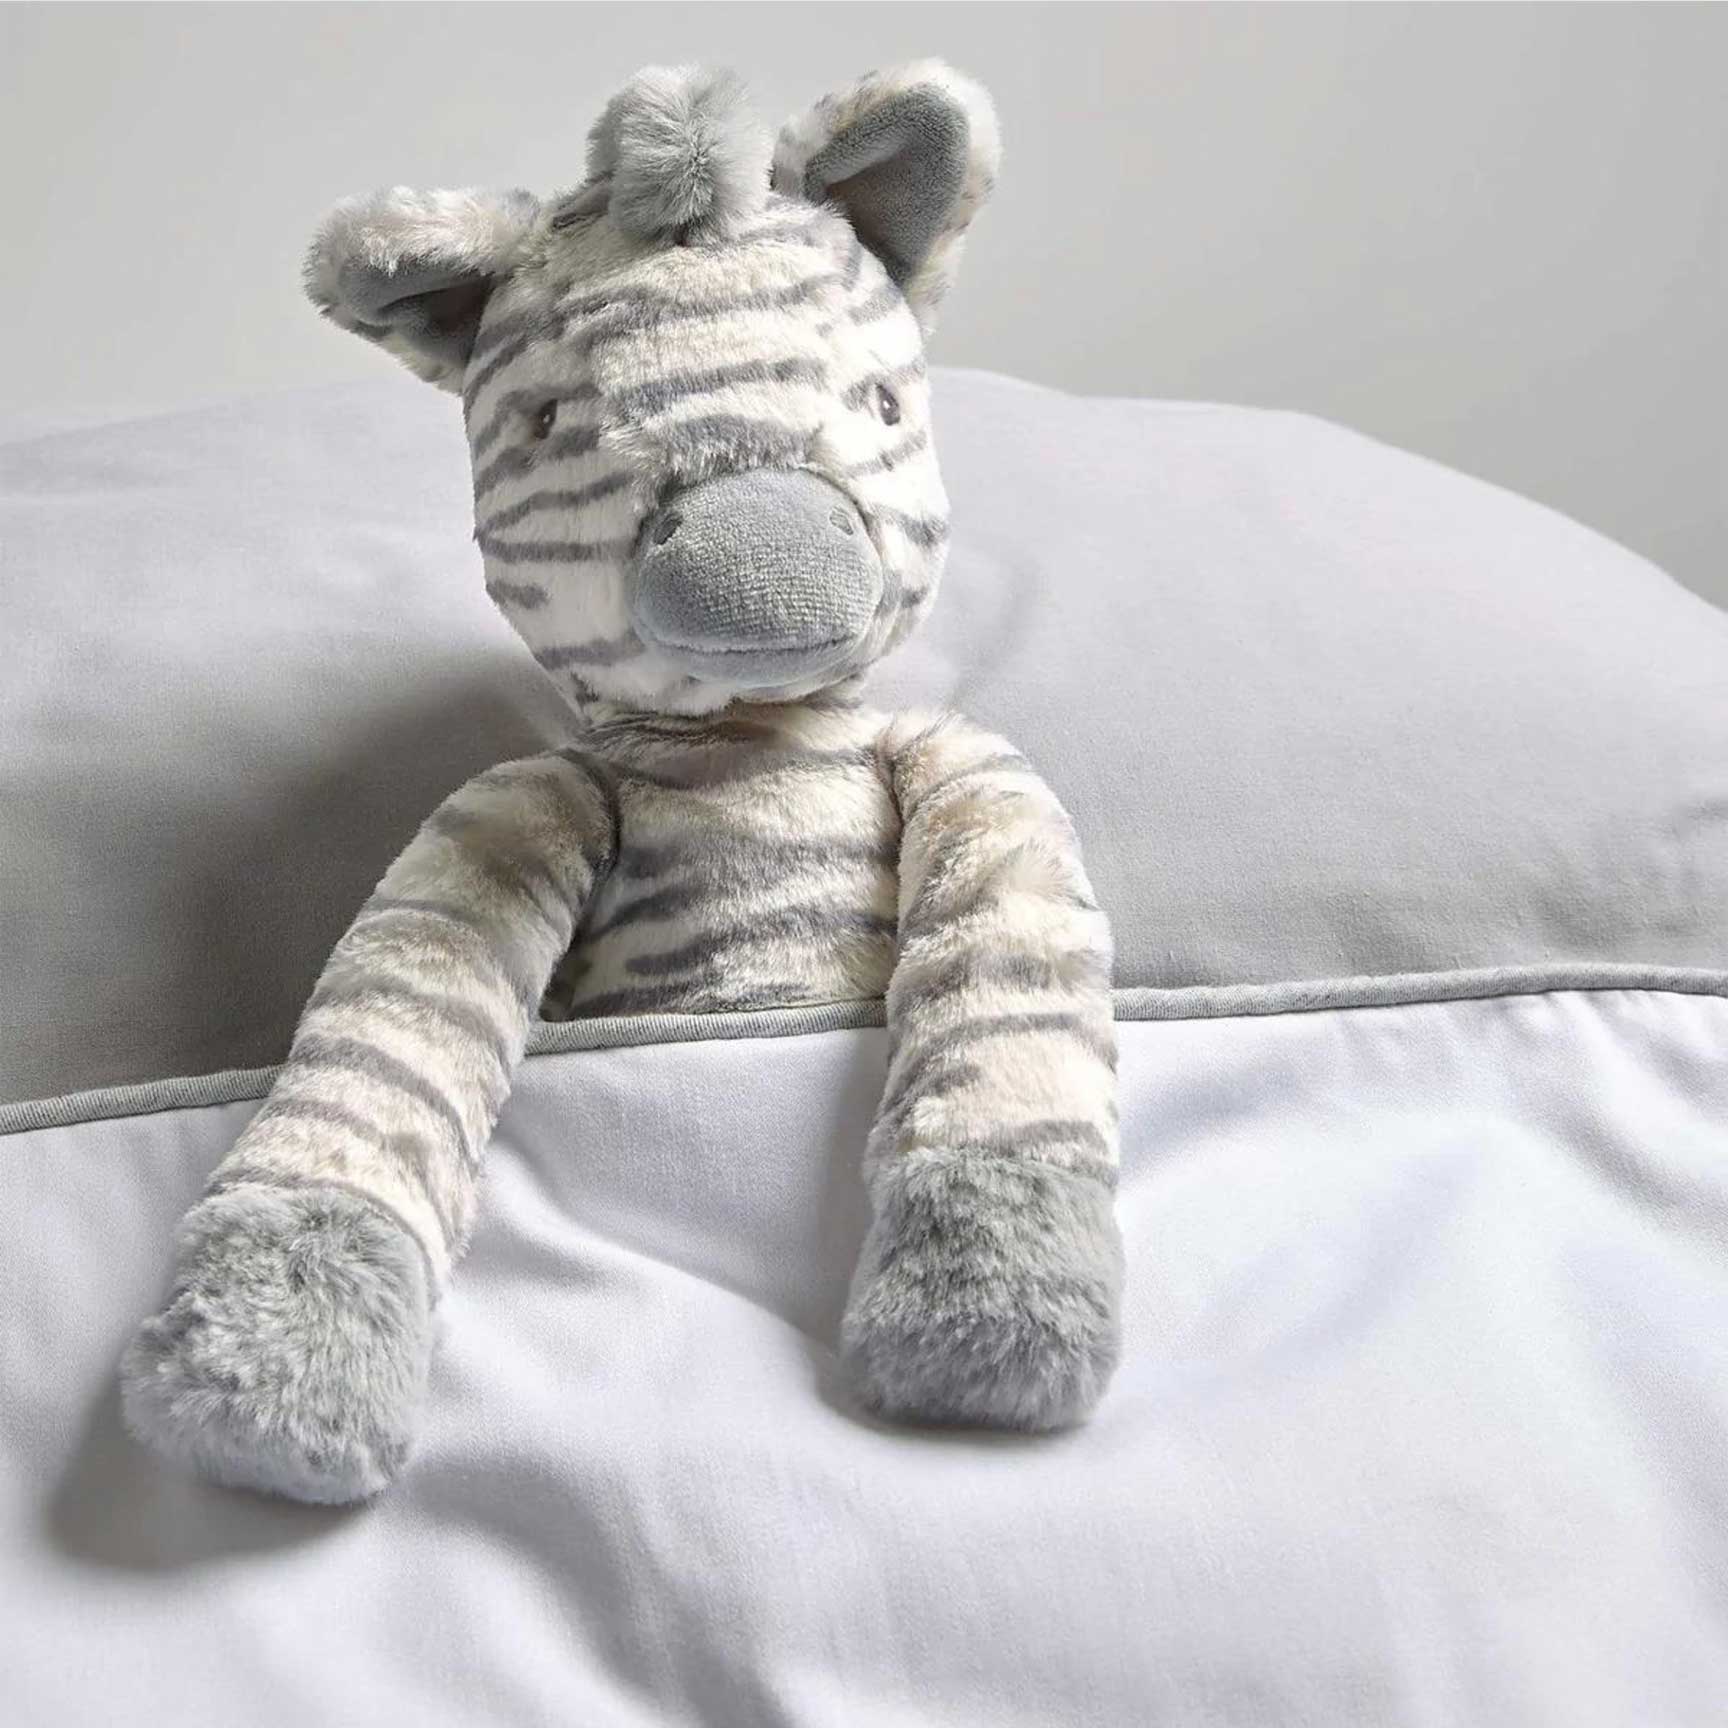 Mamas & Papas Soft Toy Welcome to the World in Zebra Soft Animals 4855WW206 5057232422105